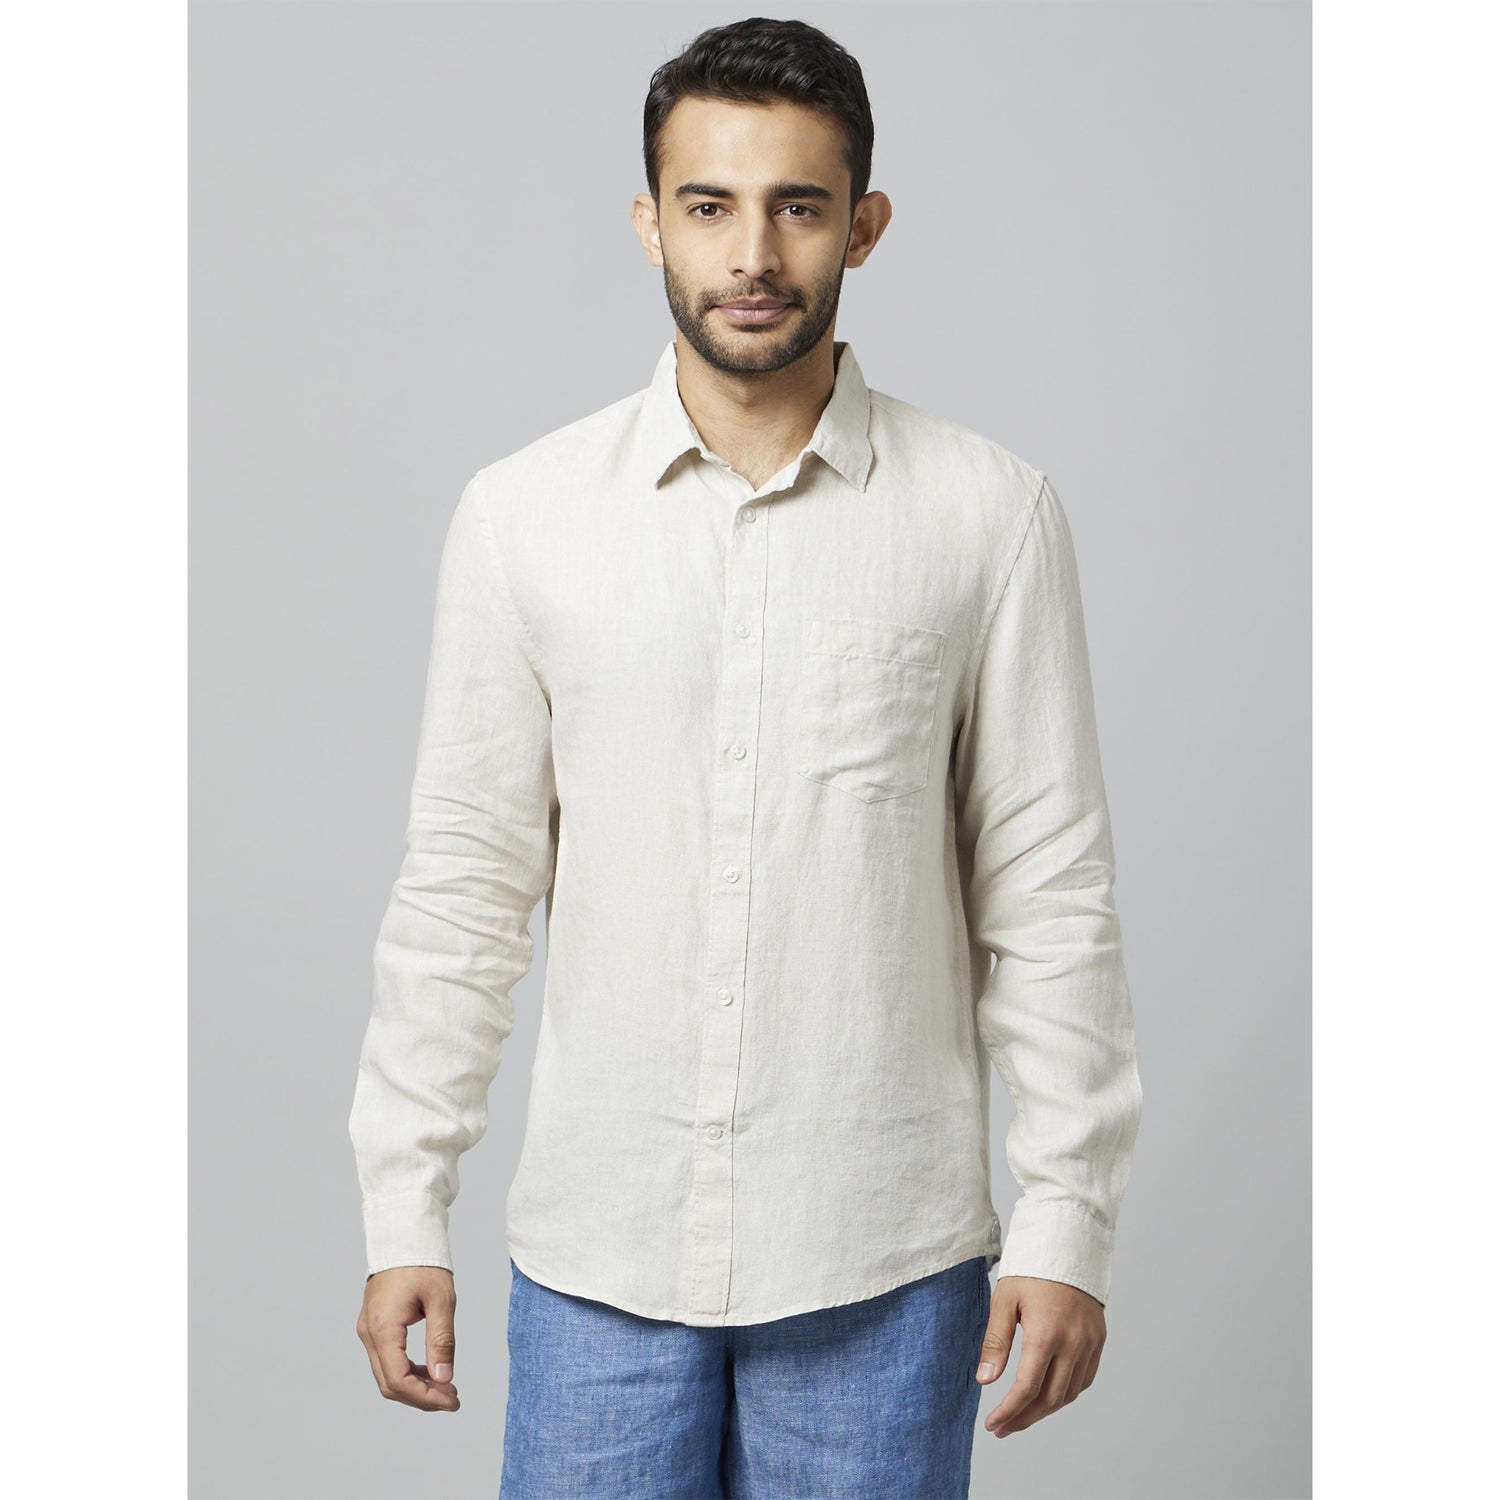 Off White Classic Spread Collar Linen Casual Shirt (DAFLIX)